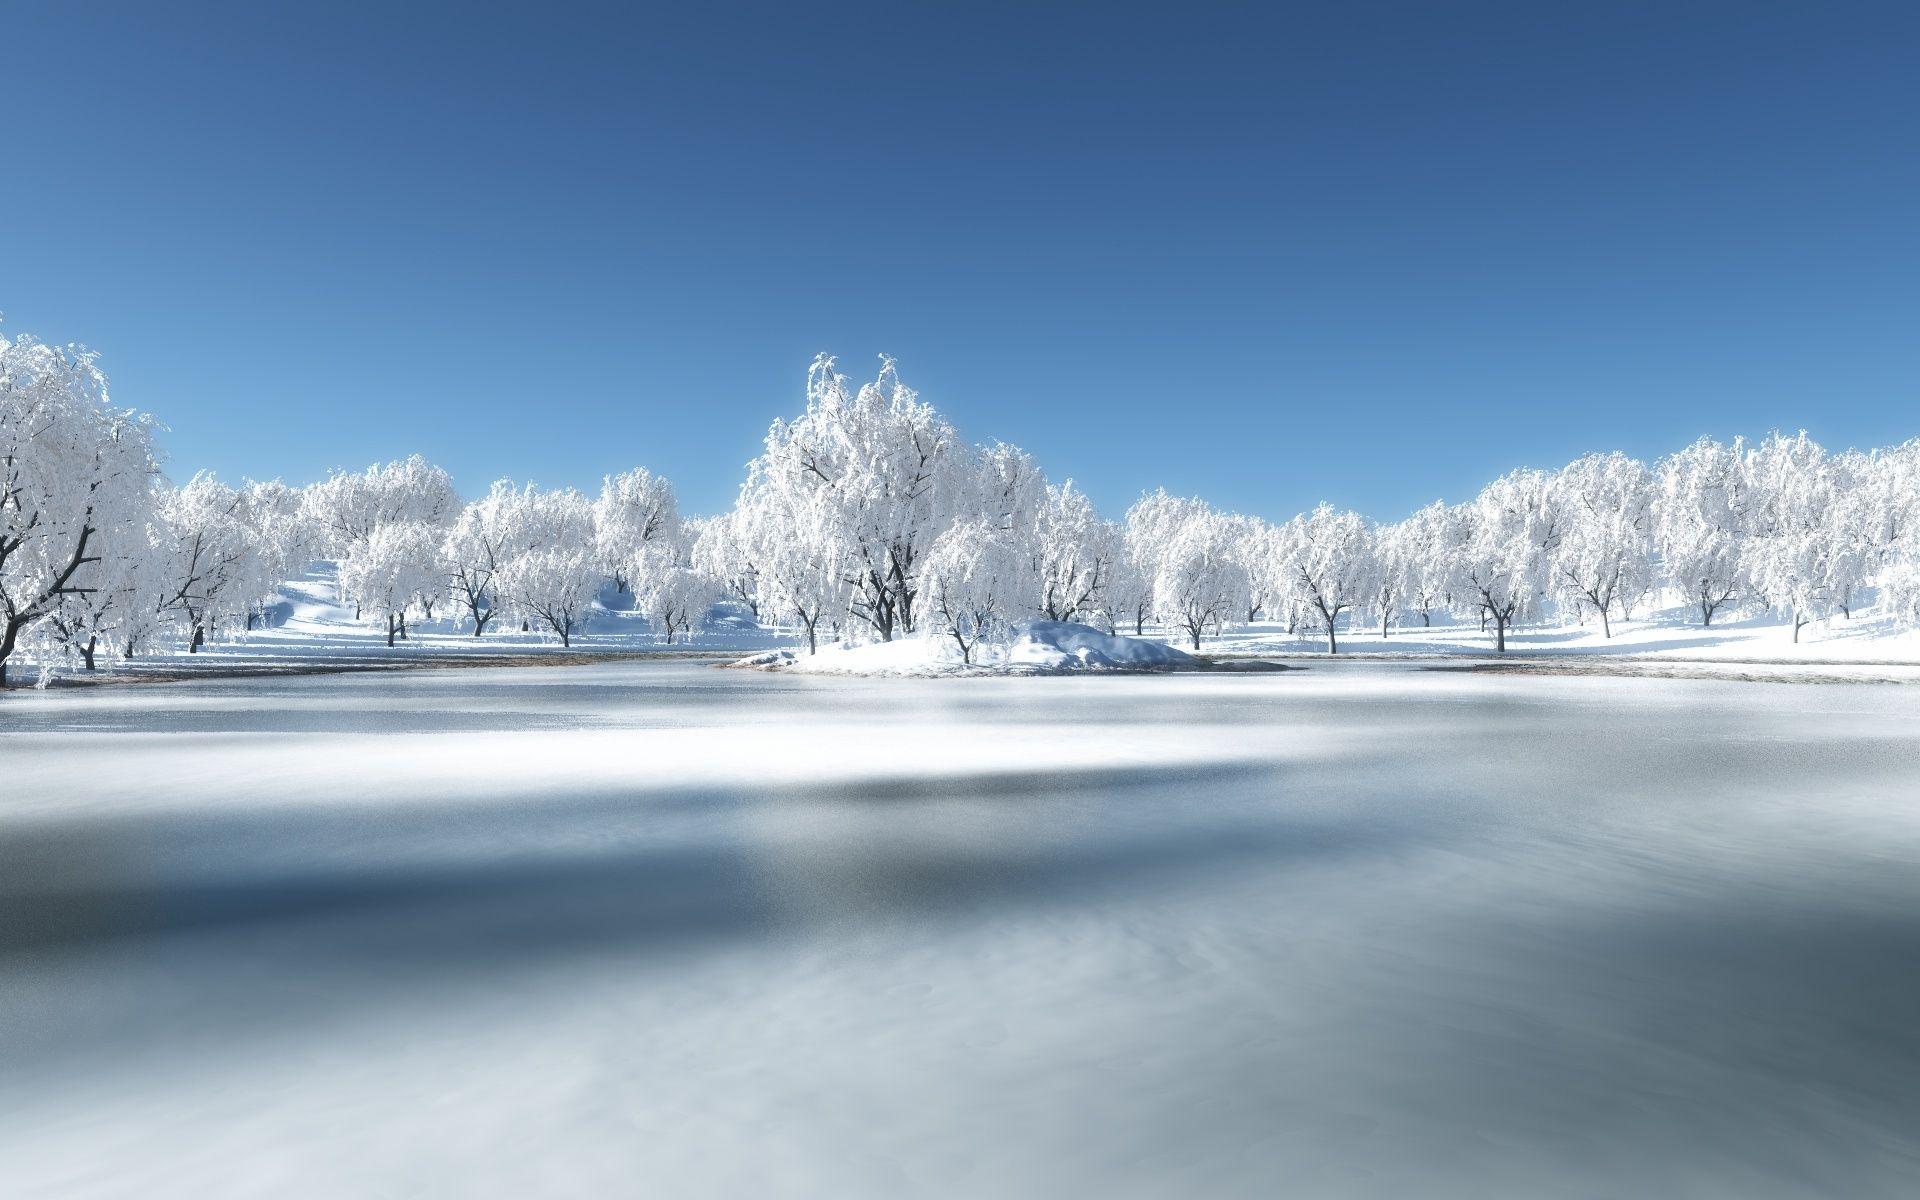 Winter Landscape Wallpaper For Desktop. Winter landscape, Winter landscape photography, Landscape wallpaper